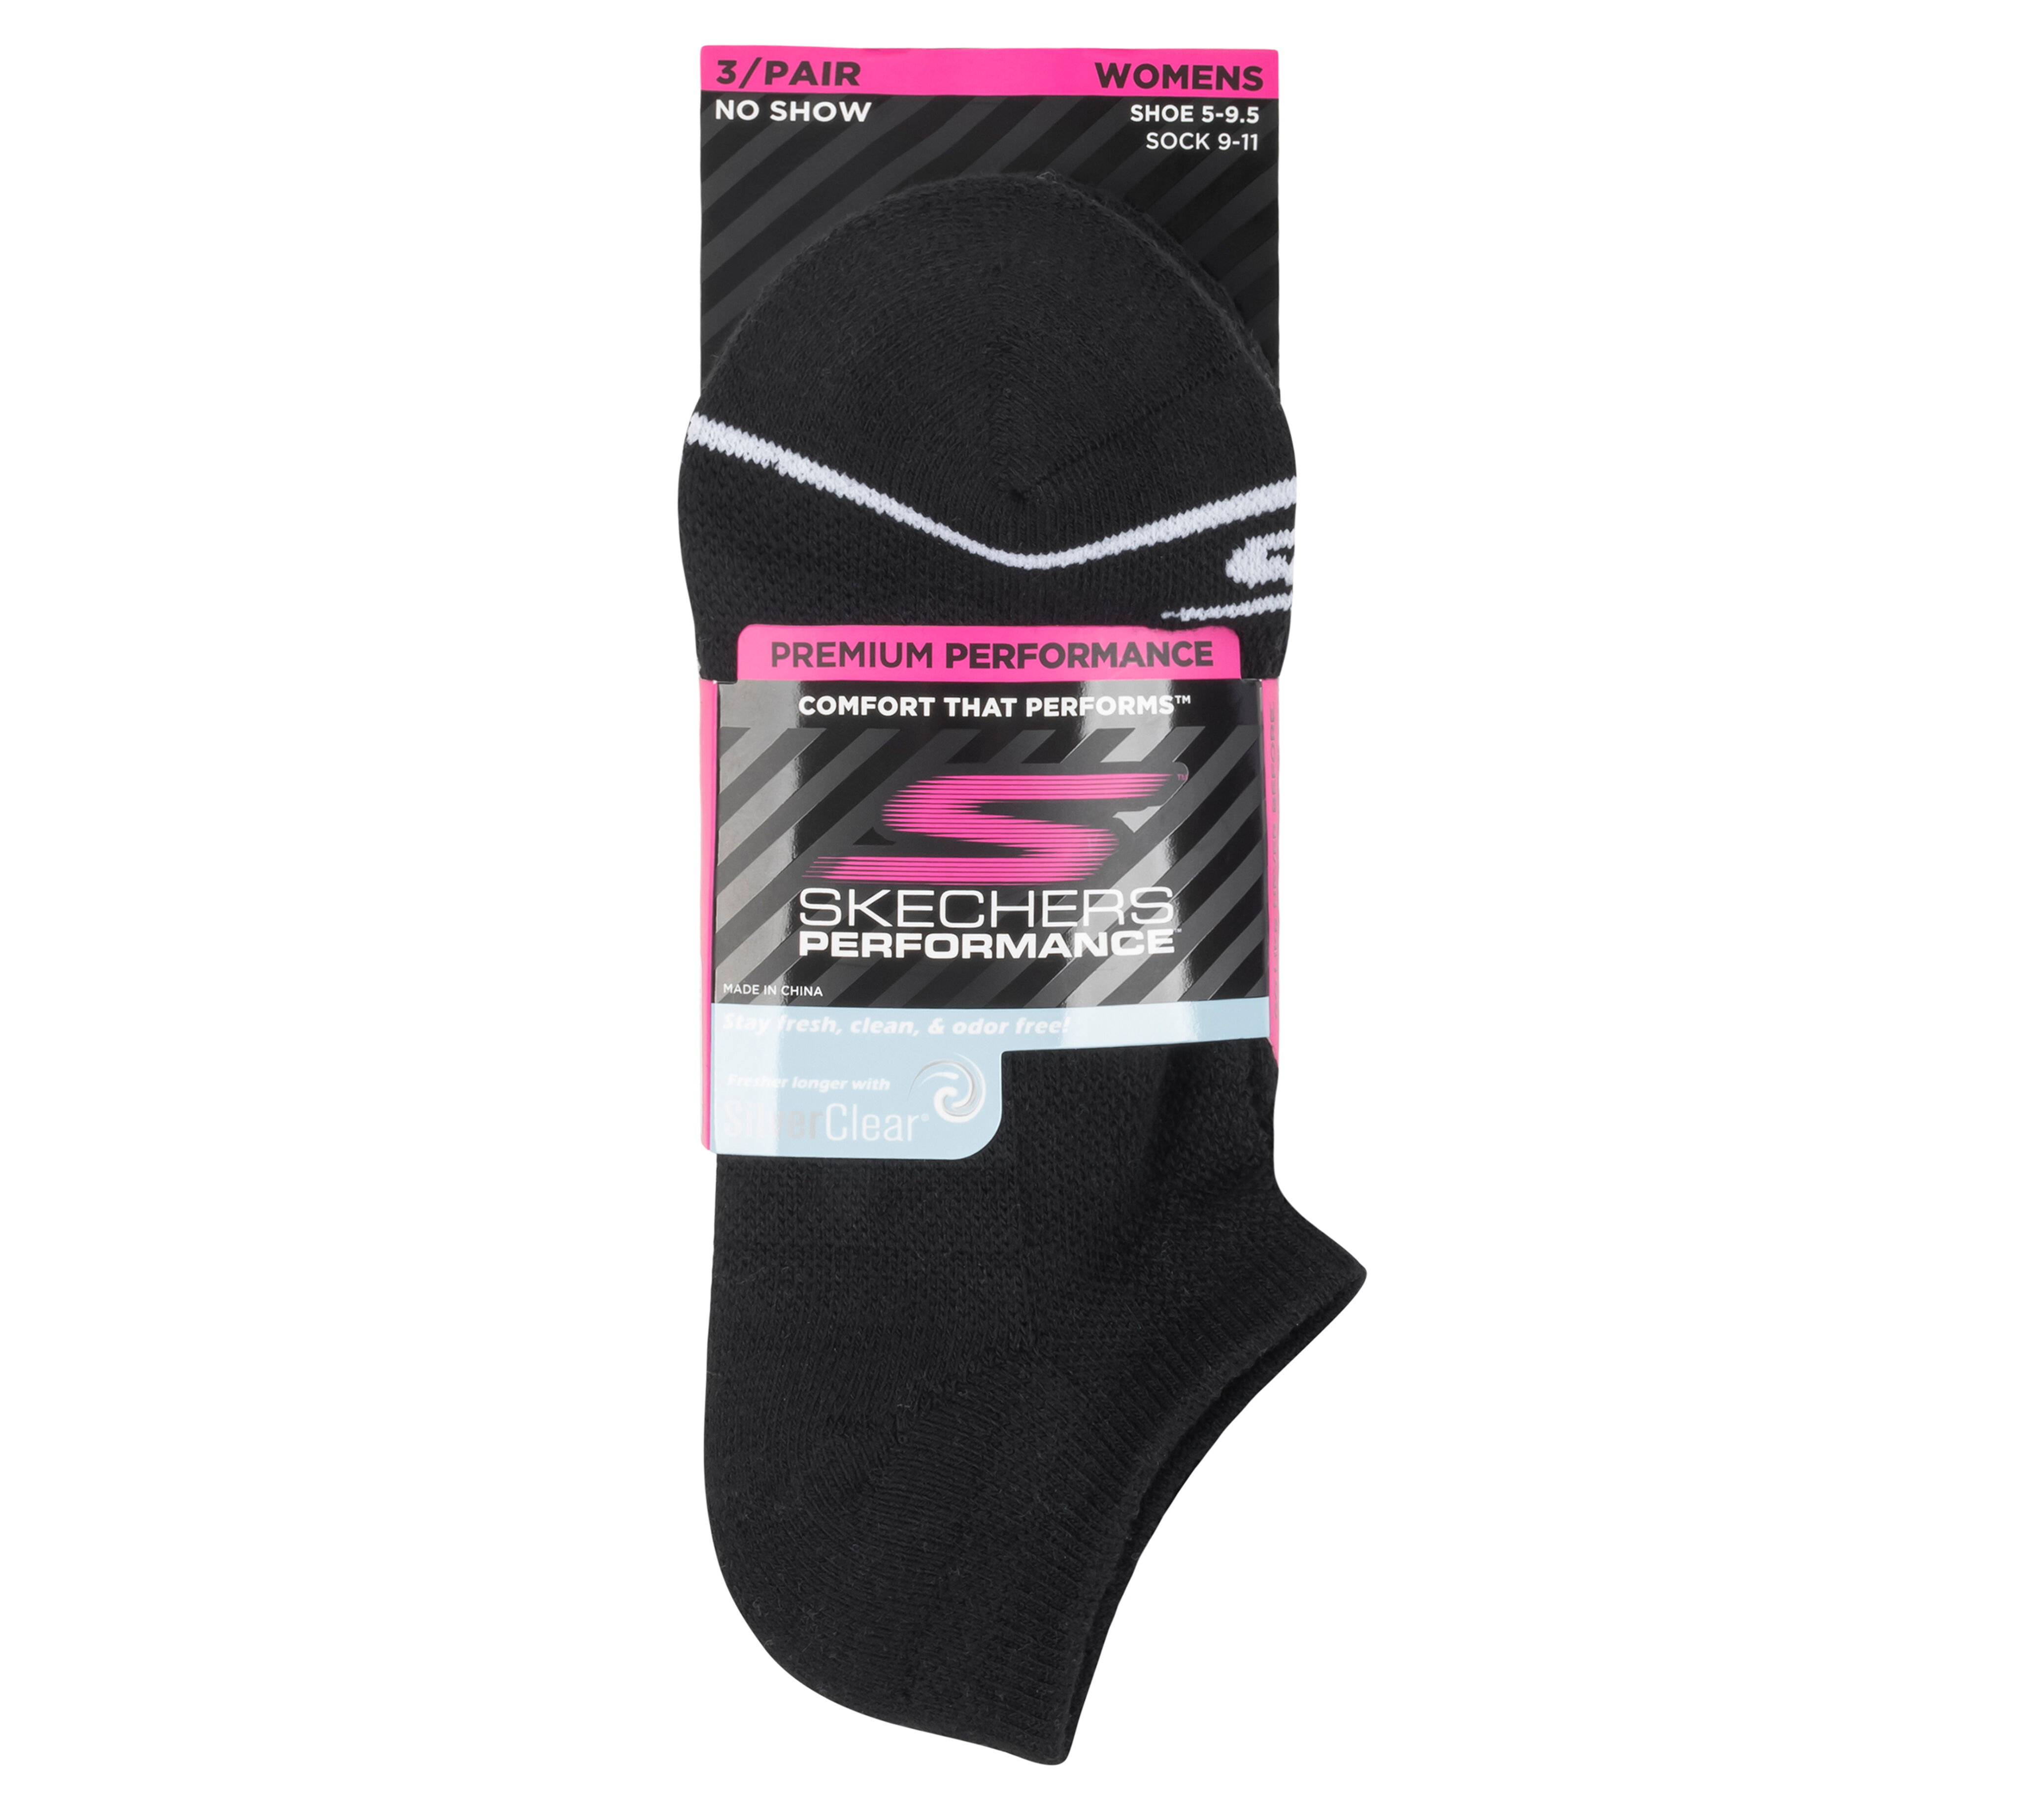 No Show Premium Basic Socks - 3 Pack